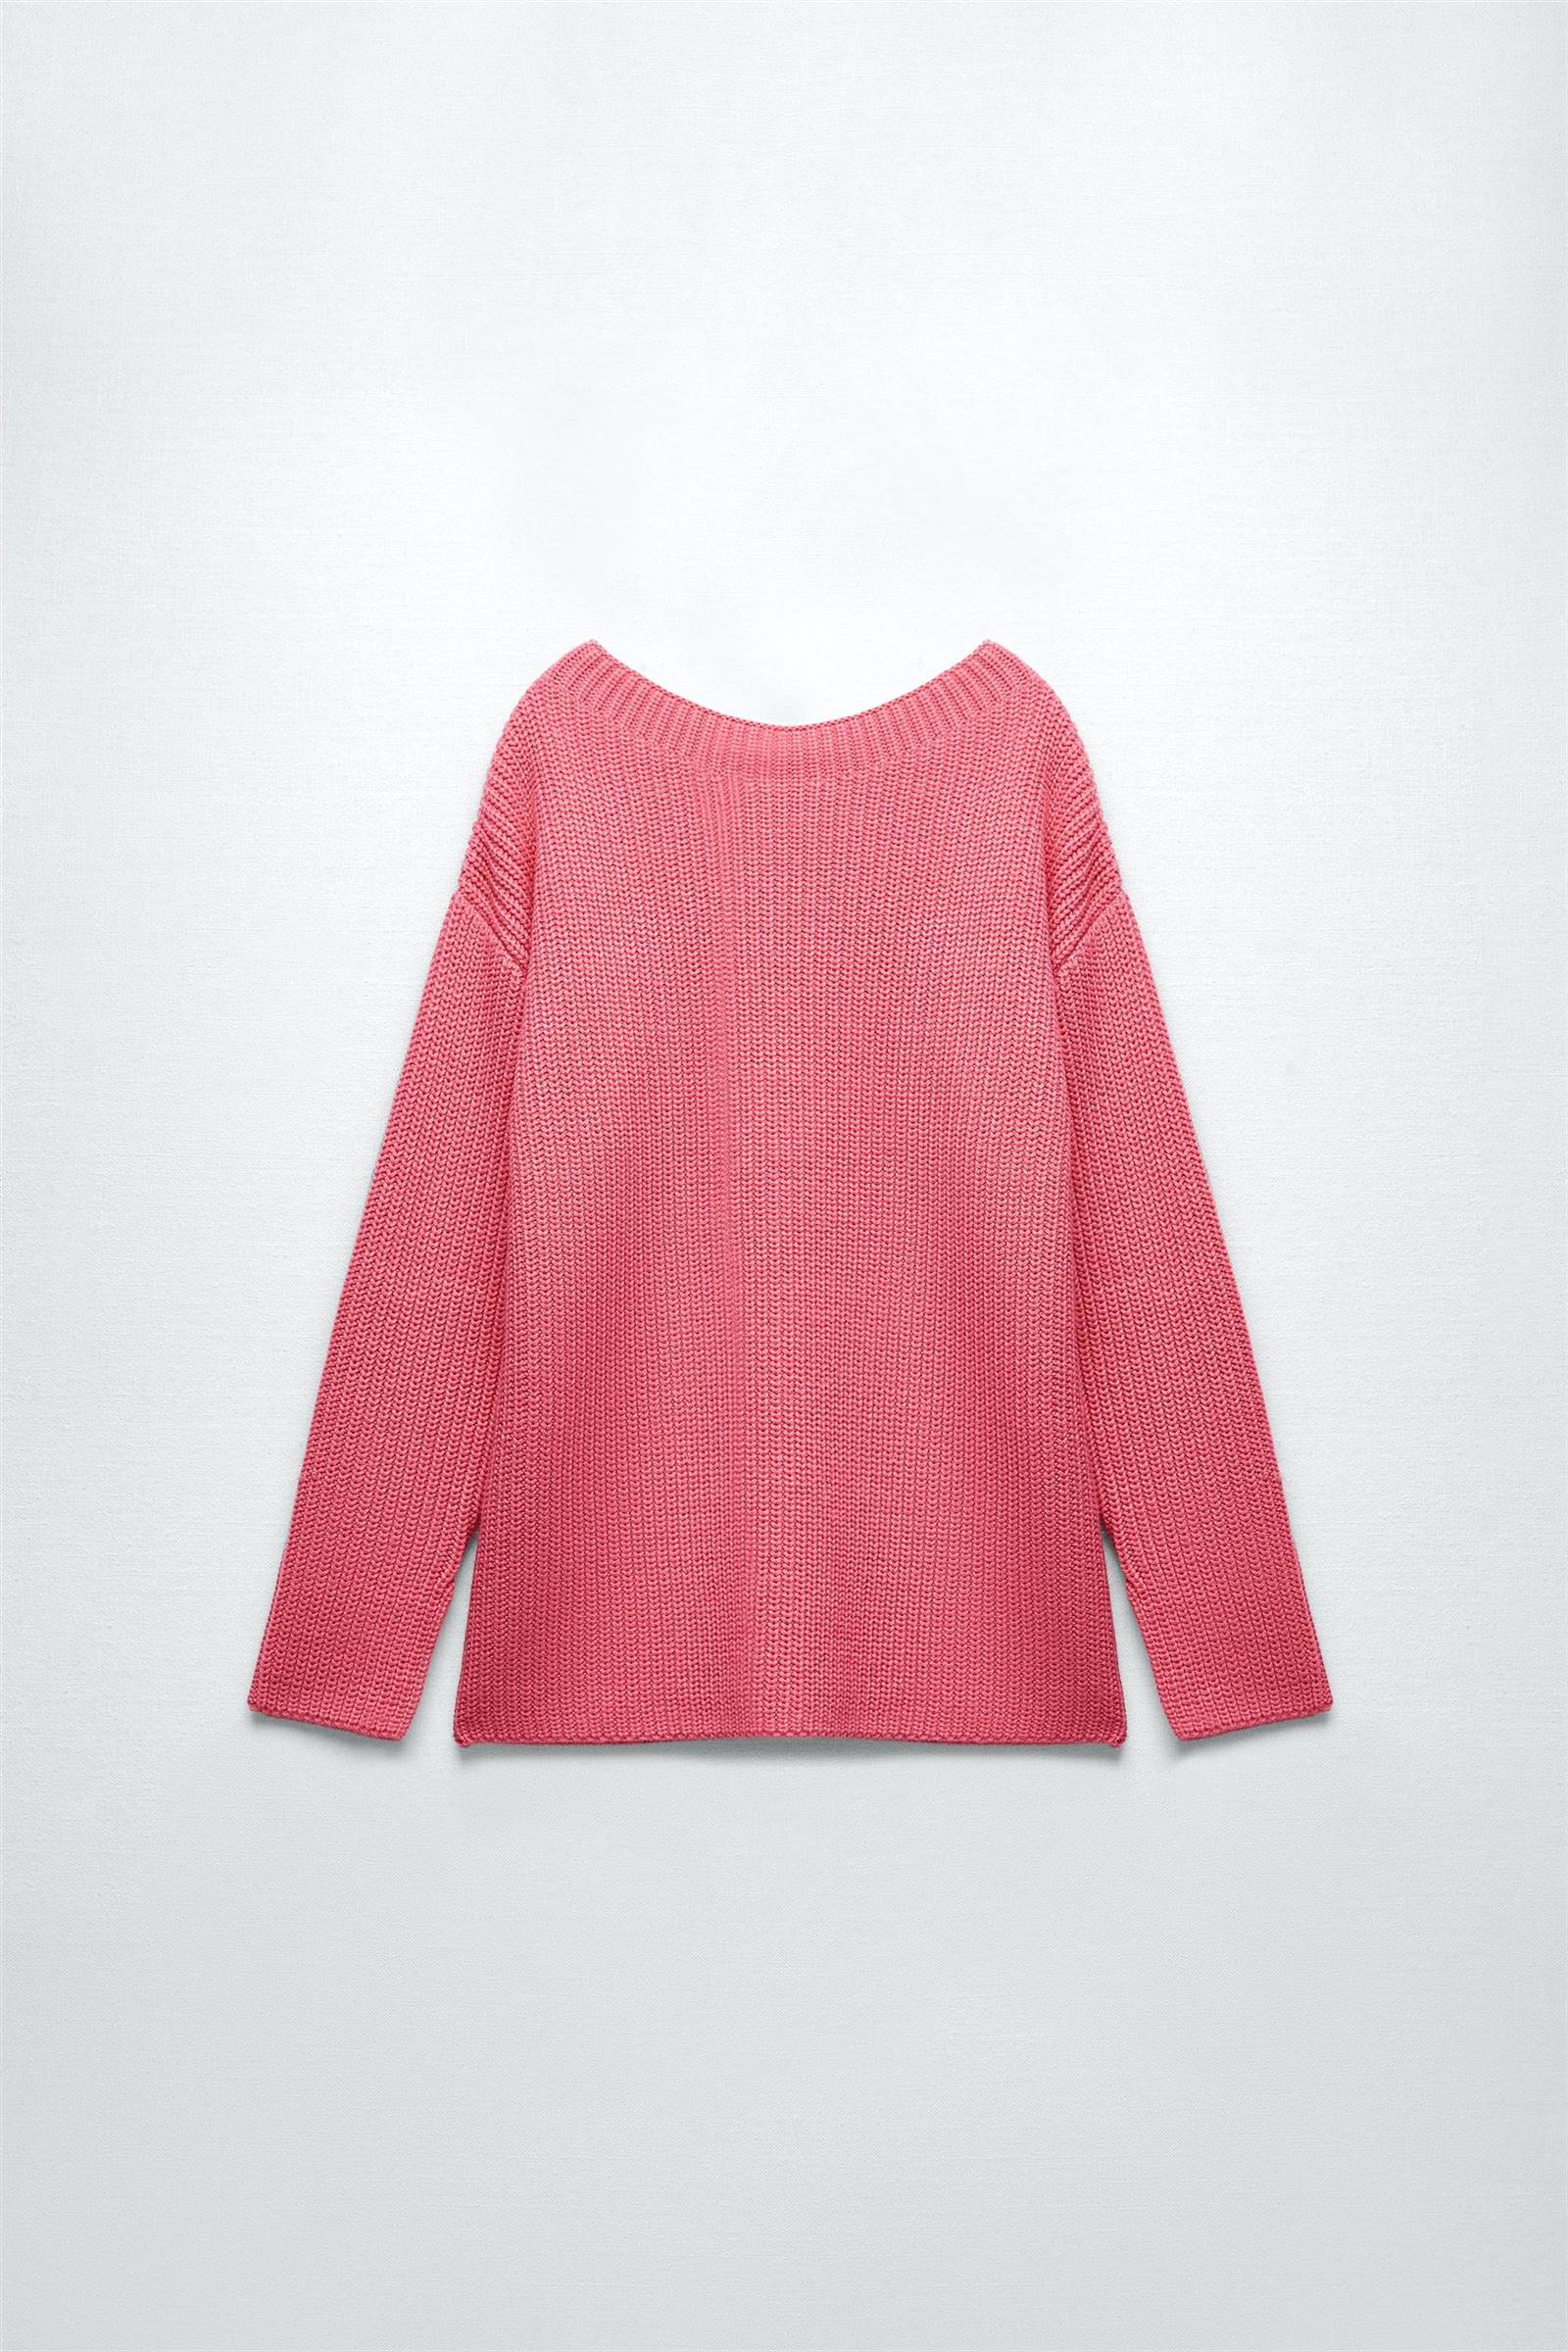 Jersey de punto rosa de Zara